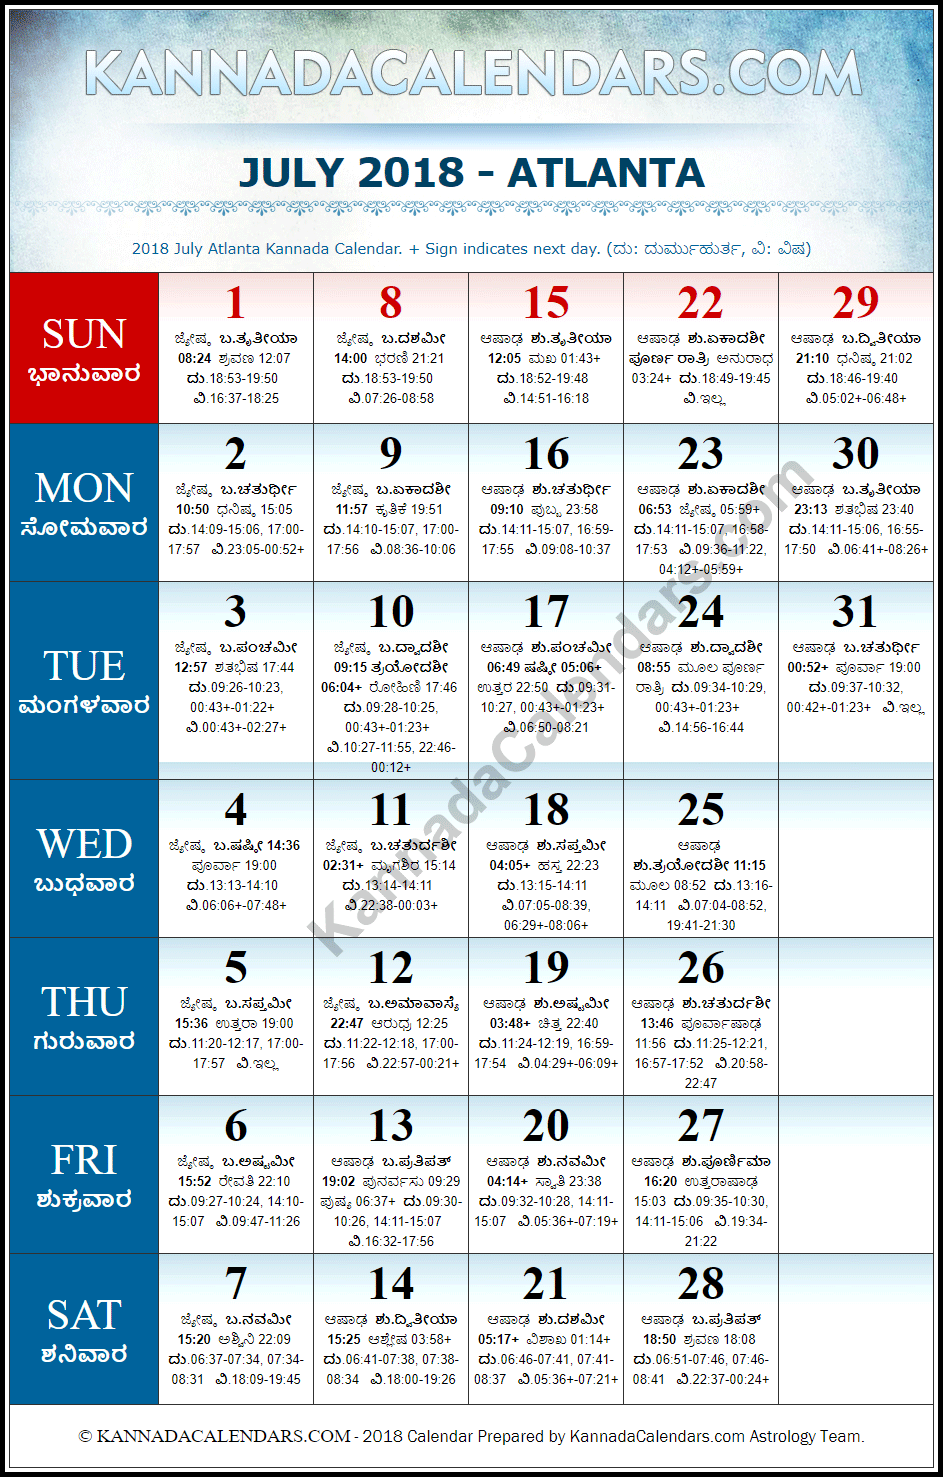 July 2018 Kannada Calendar for Atlanta, USA